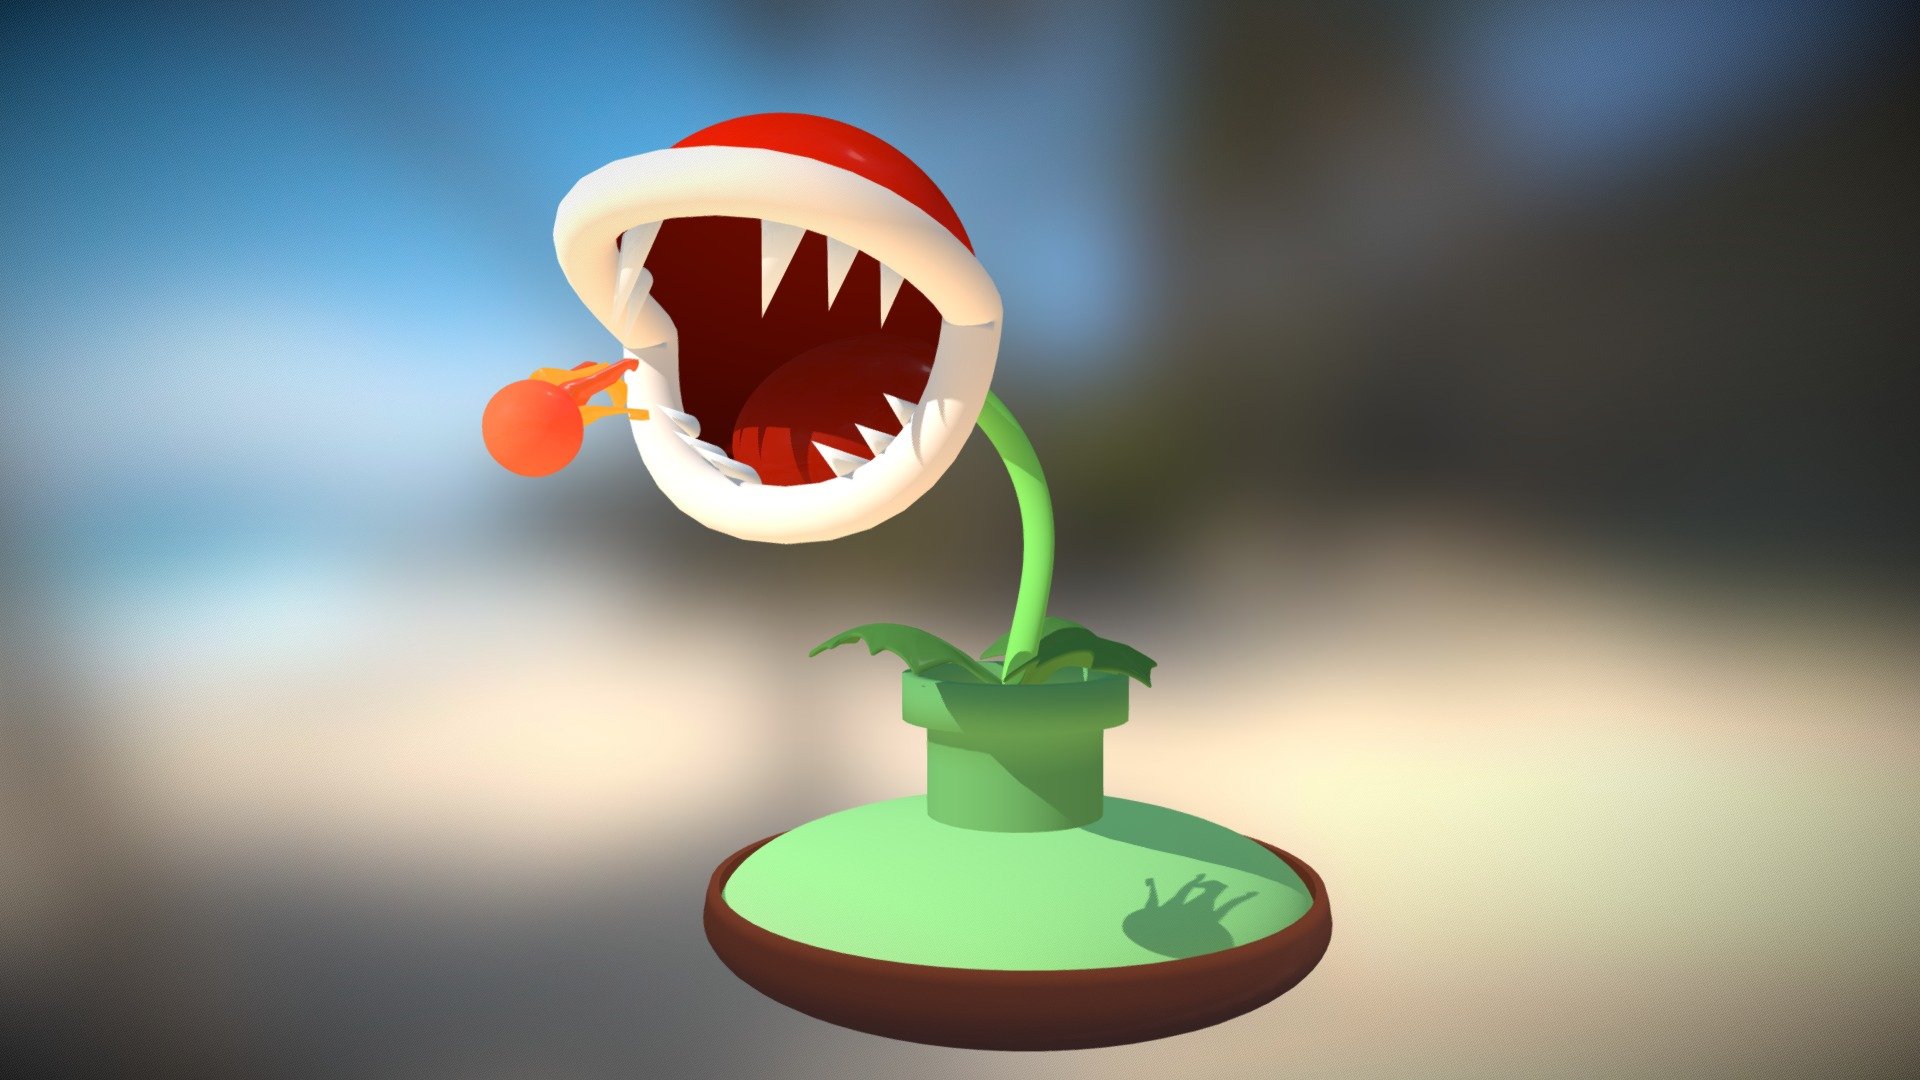 Super Mario's Piranha Plant model. 

All rights to Nintendo - Piranha Plant - 3D model by Dan J Carrasco (@danjcarrasco) 3d model